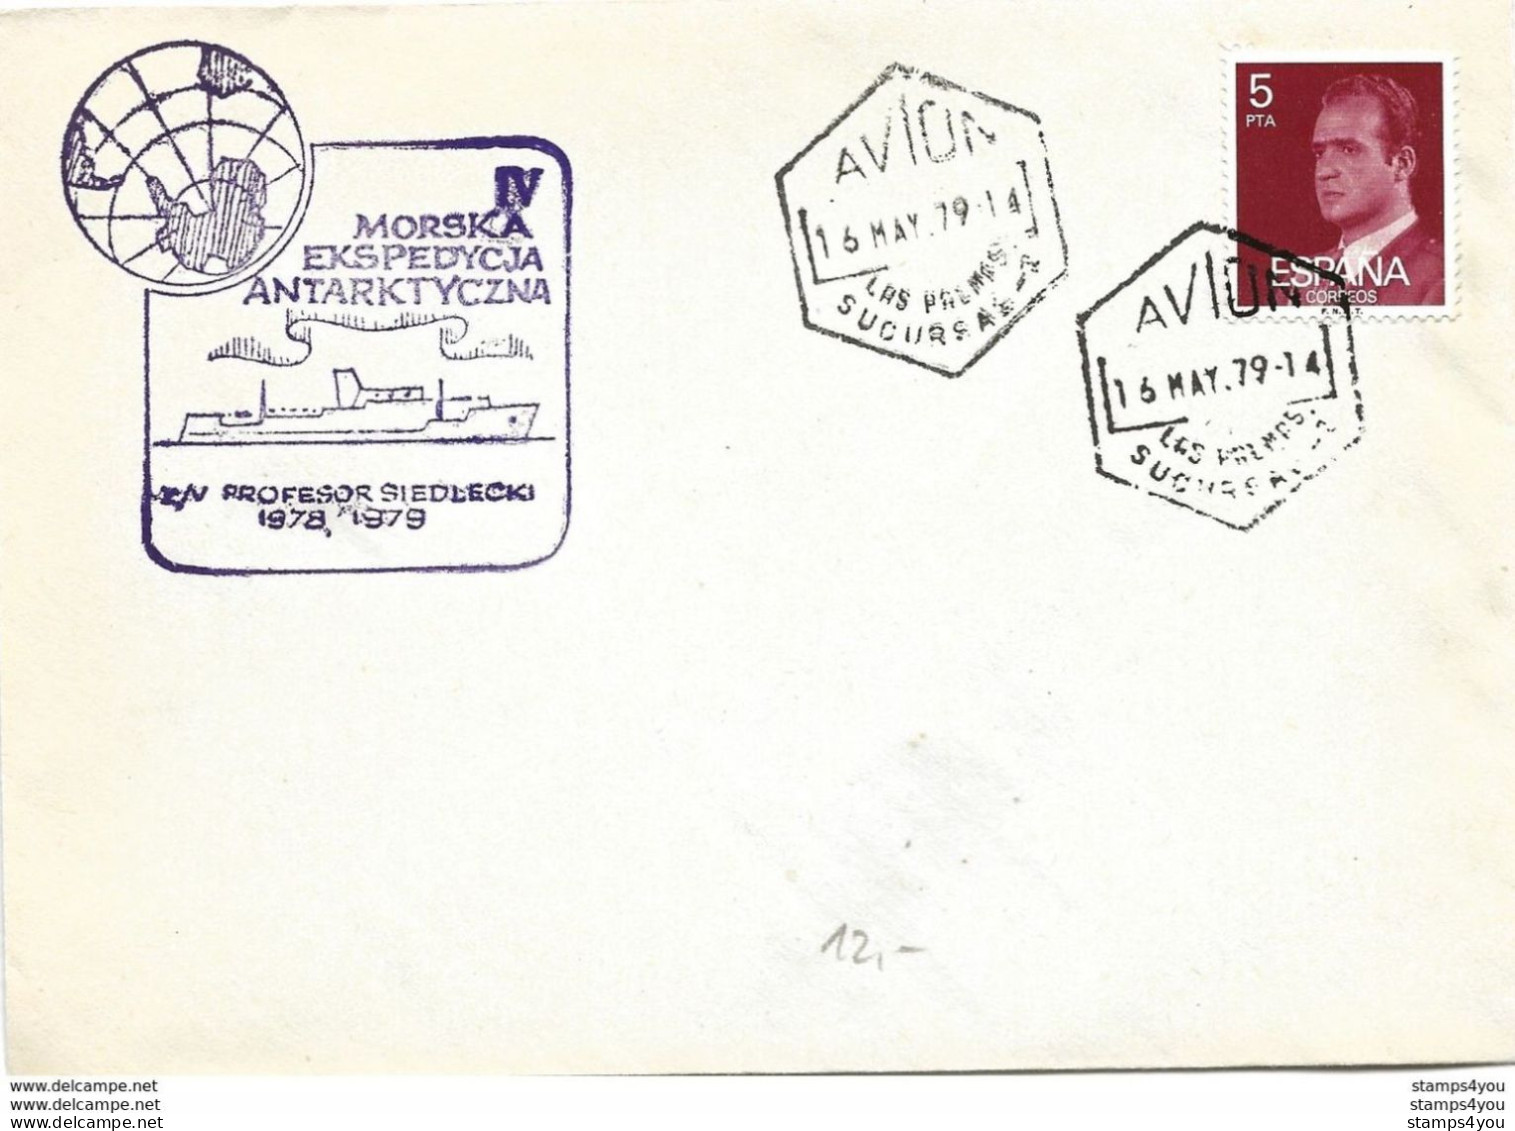 234 - 55 - Enveloppe Postée à Las Palmas Navire Prof Siedliecki" Exp Antarctique 1979 - Polar Ships & Icebreakers